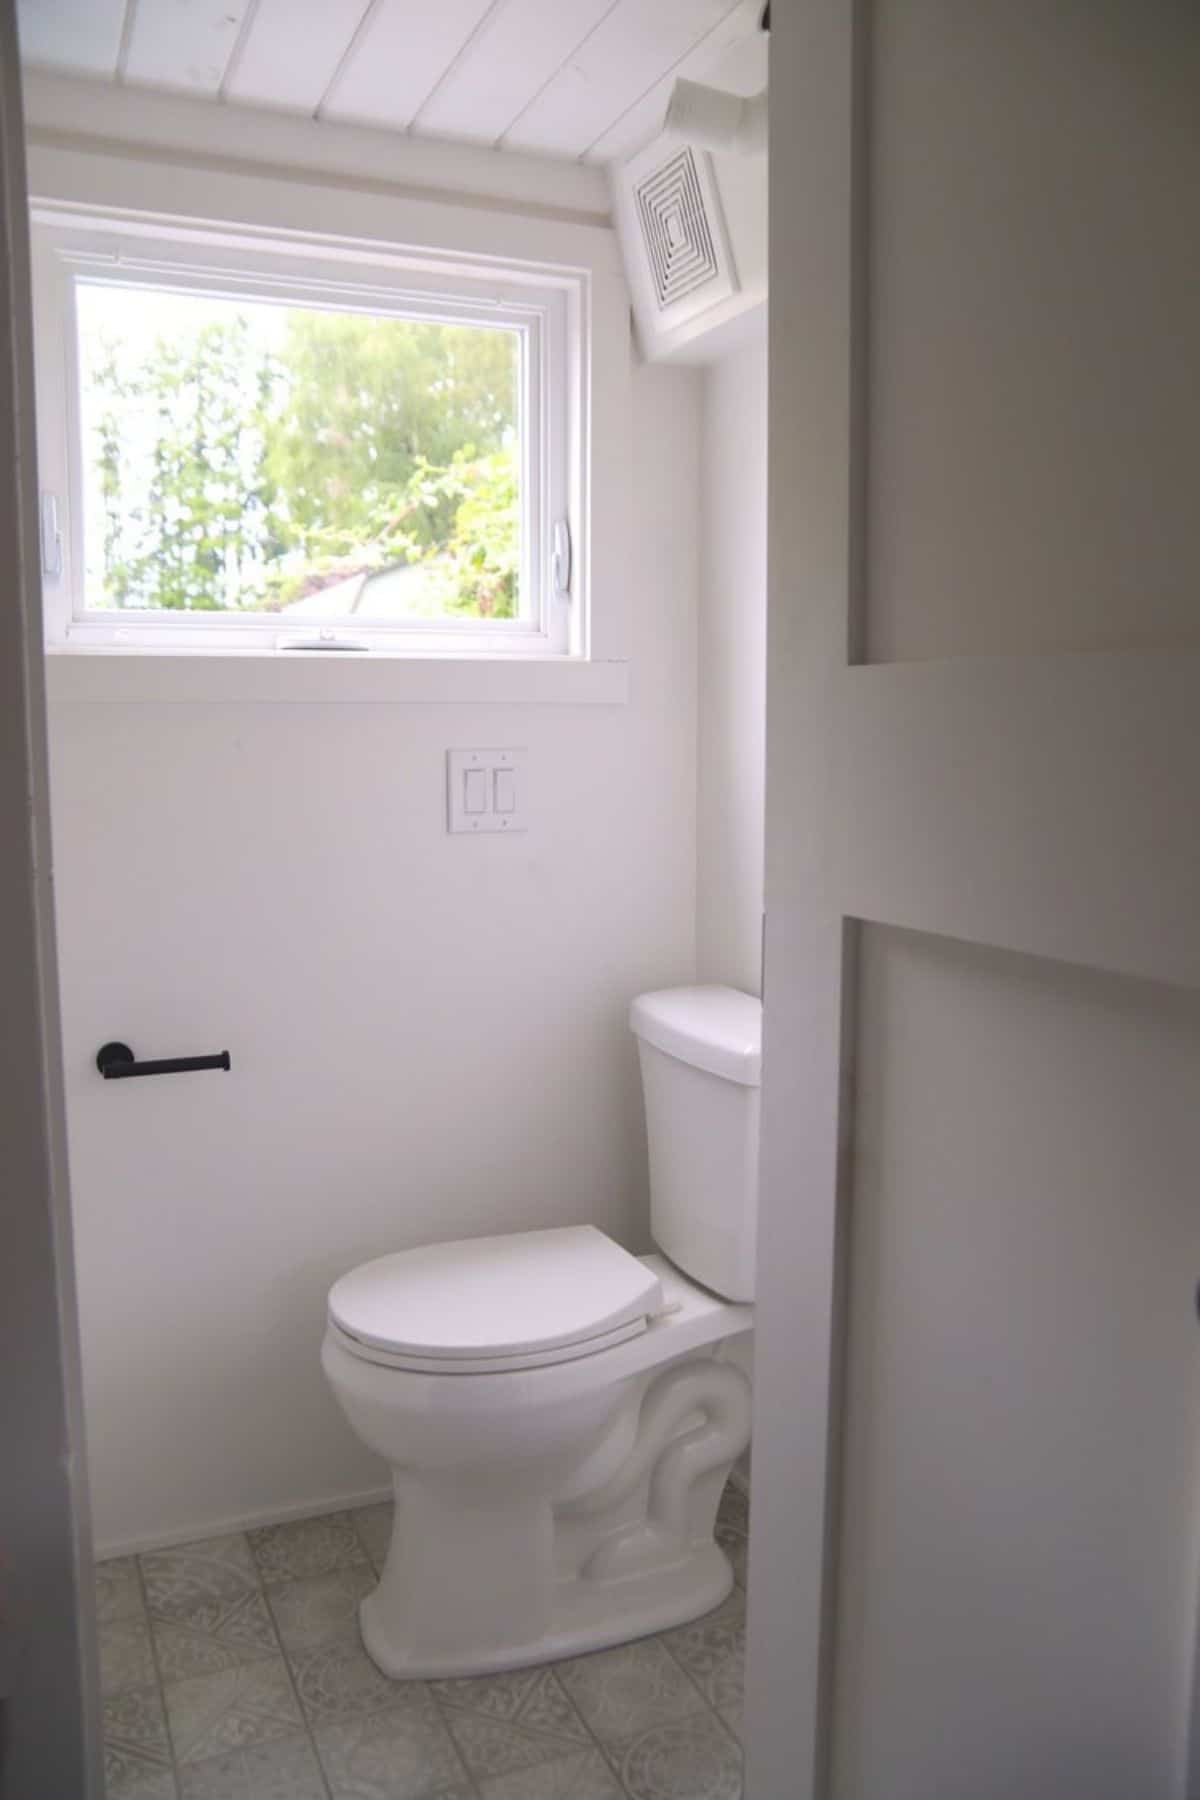 white flush toilet behind white bathroom door